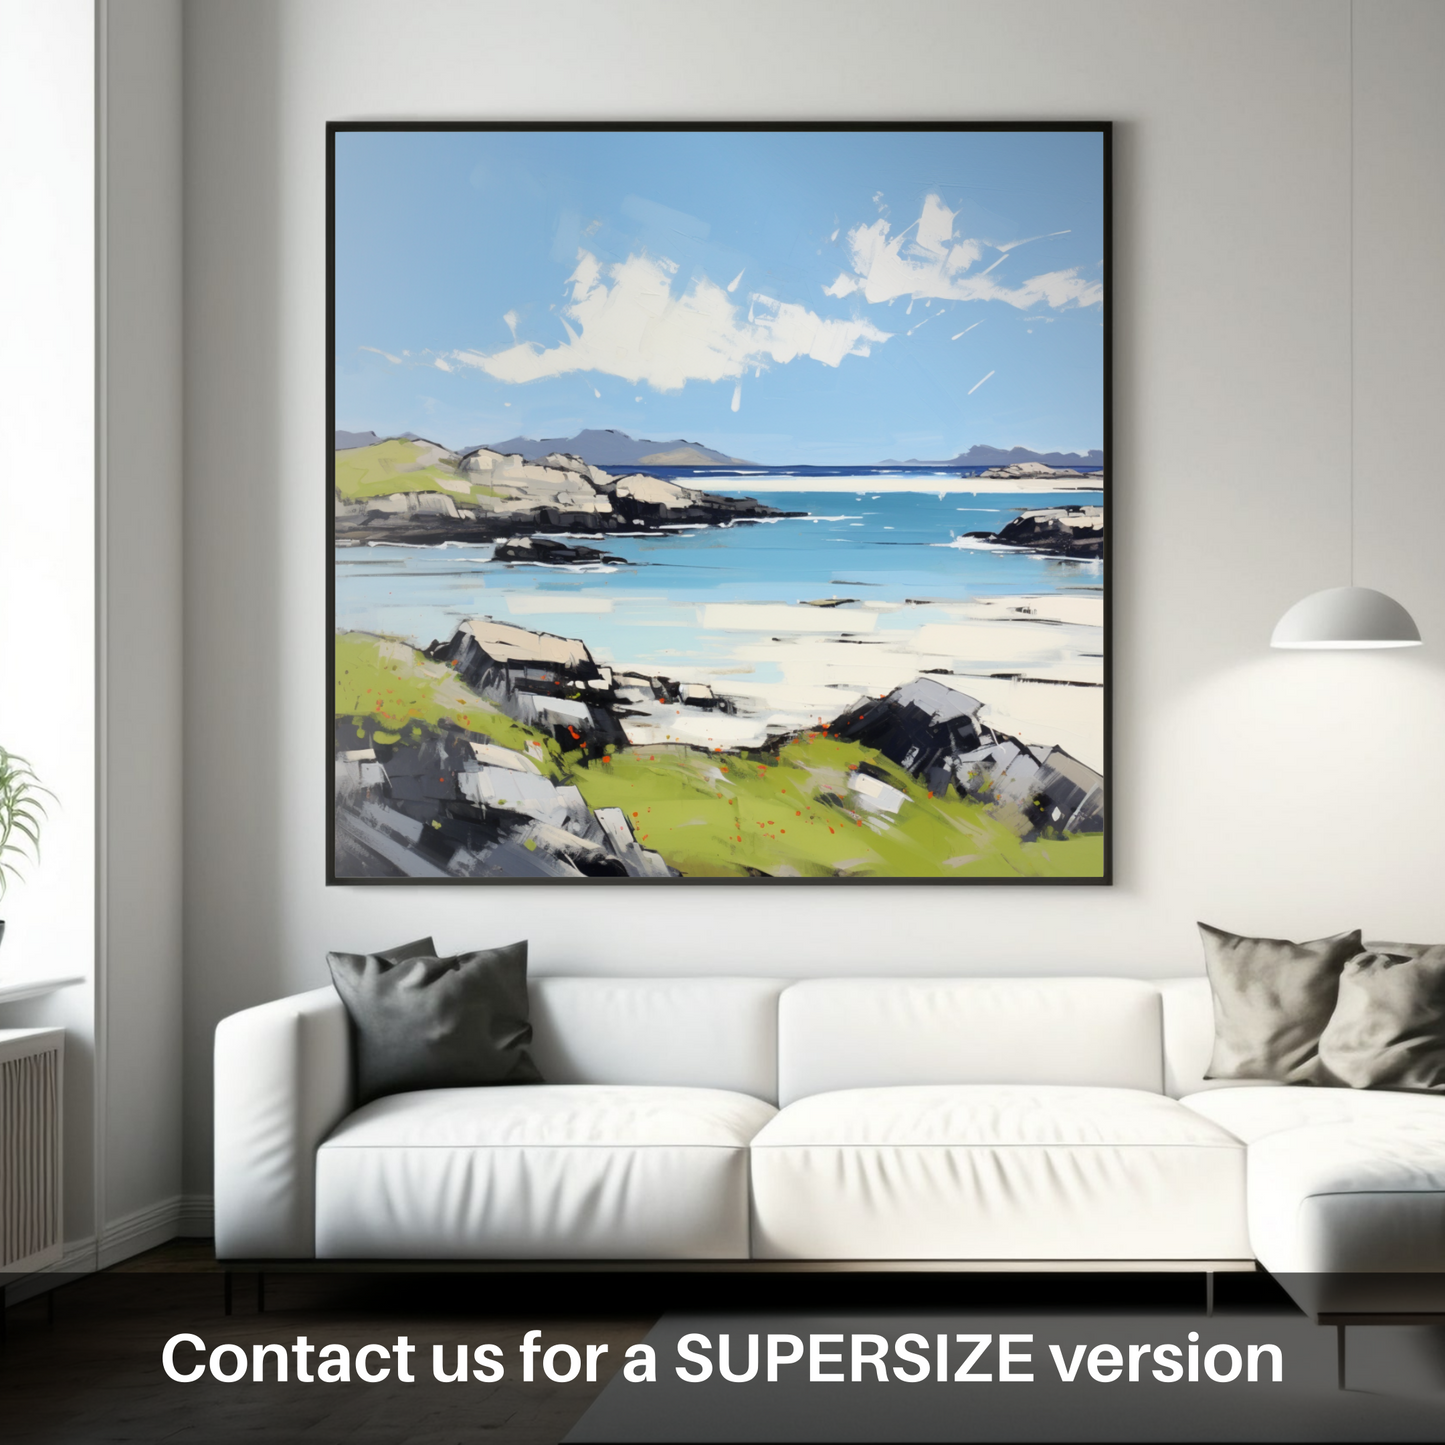 Huge supersize print of Isle of Harris, Outer Hebrides in summer